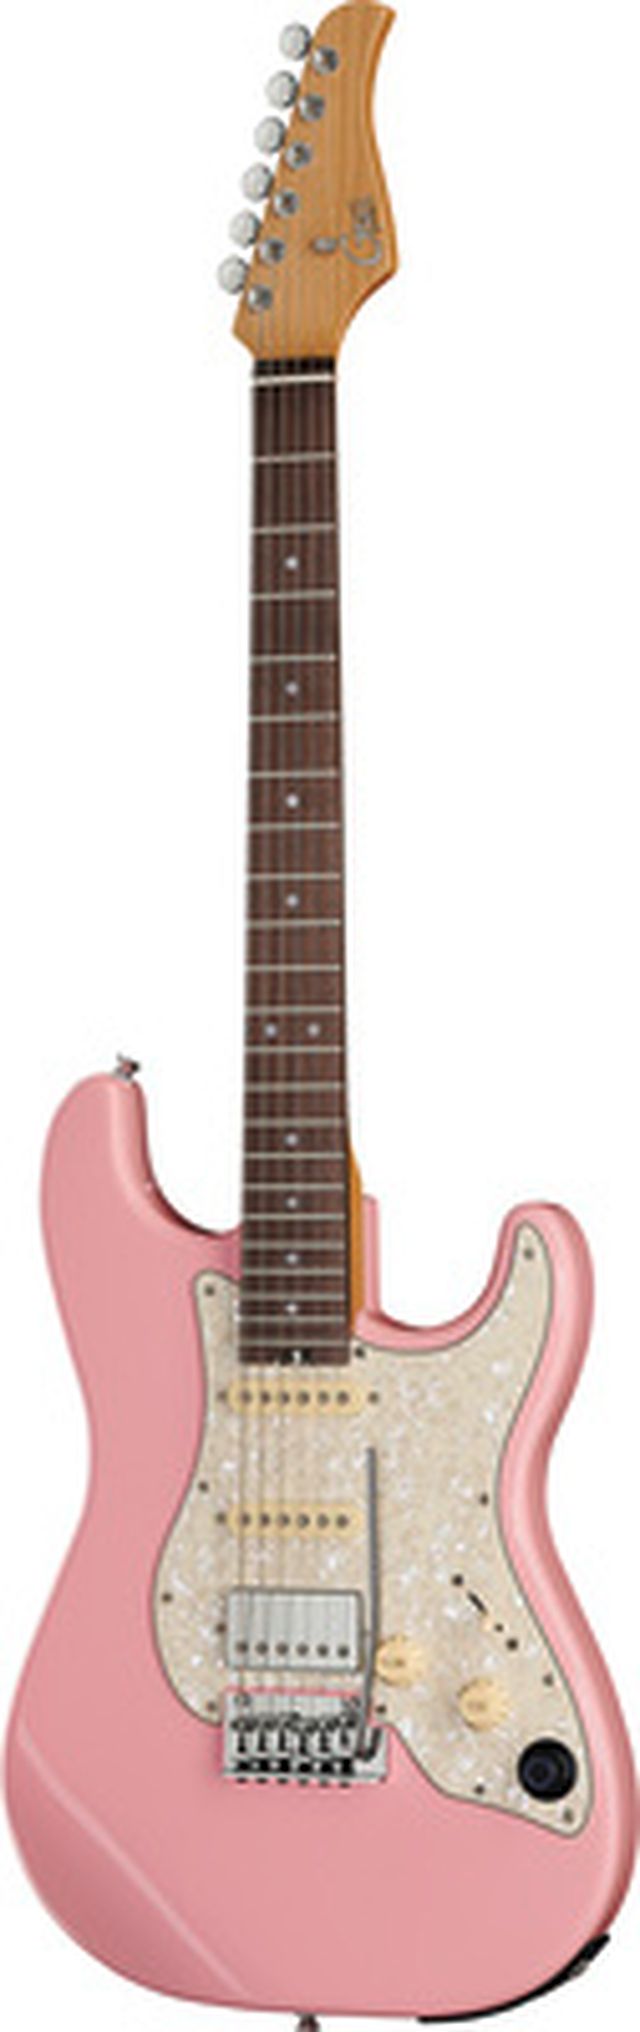 Mooer GTRS Guitars Standard 800 SP